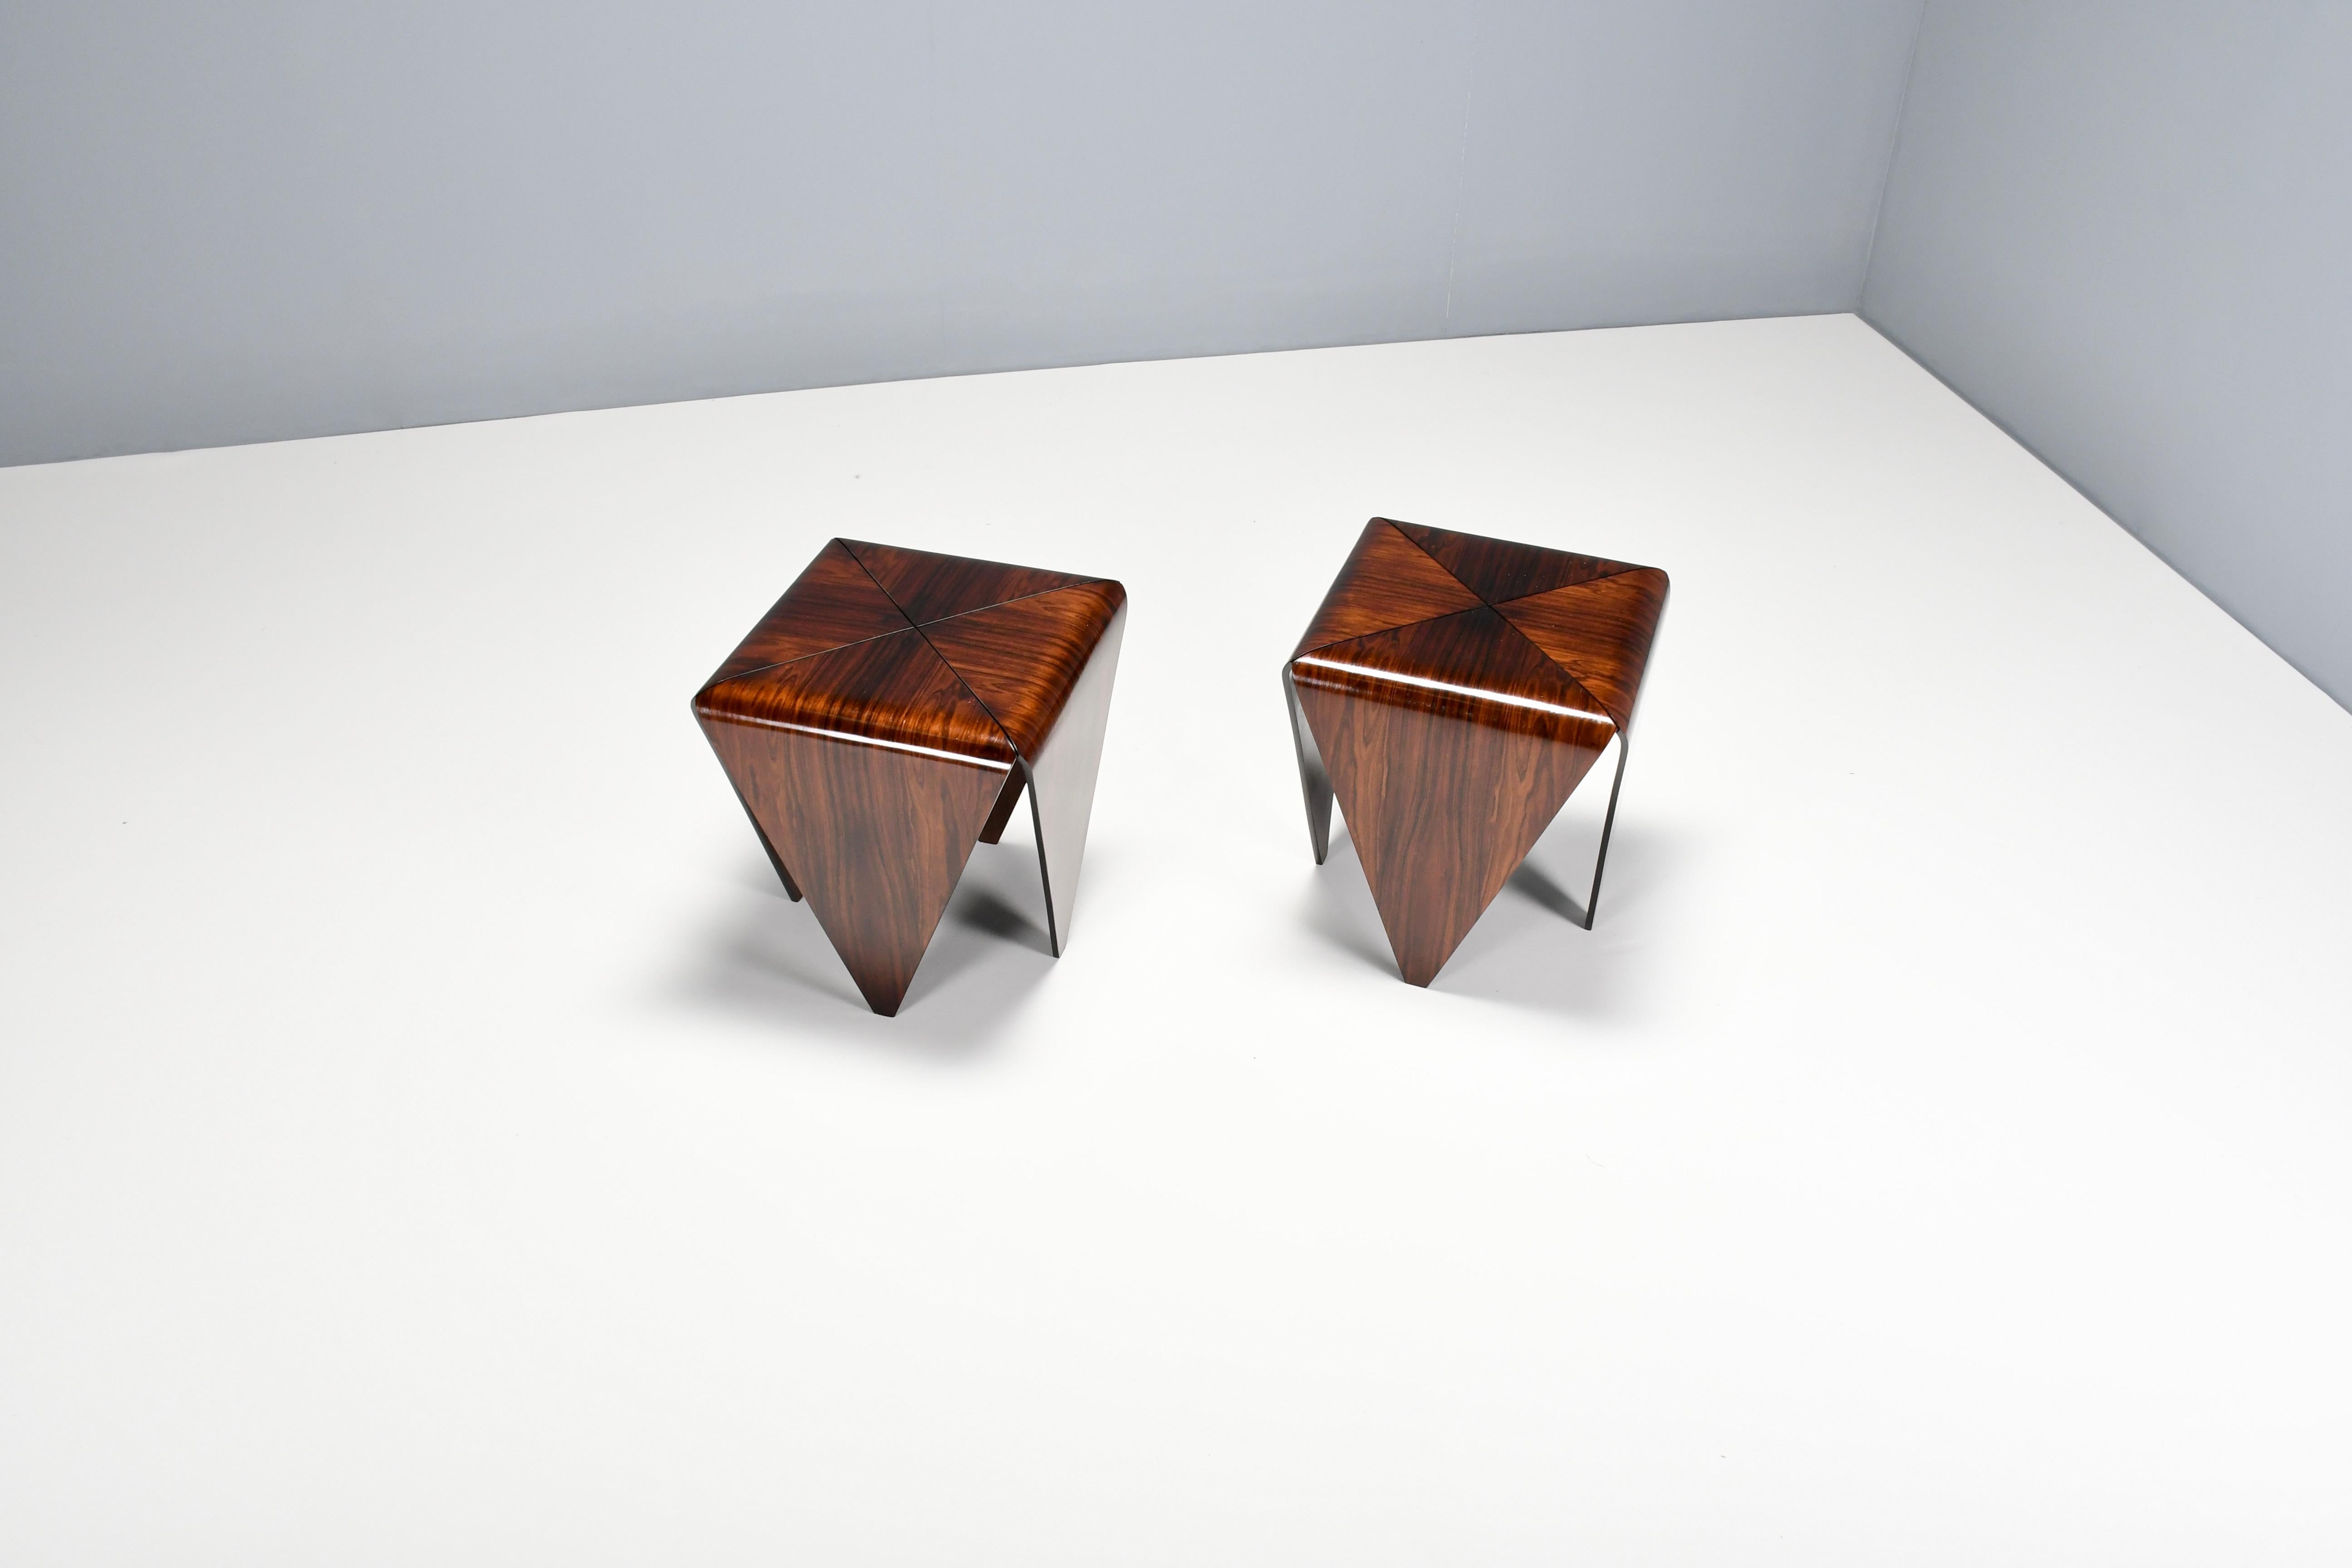 Brazilian Set of Two Jorge Zalszupin Petalas Tables by L’atelier, Brazil, 1959